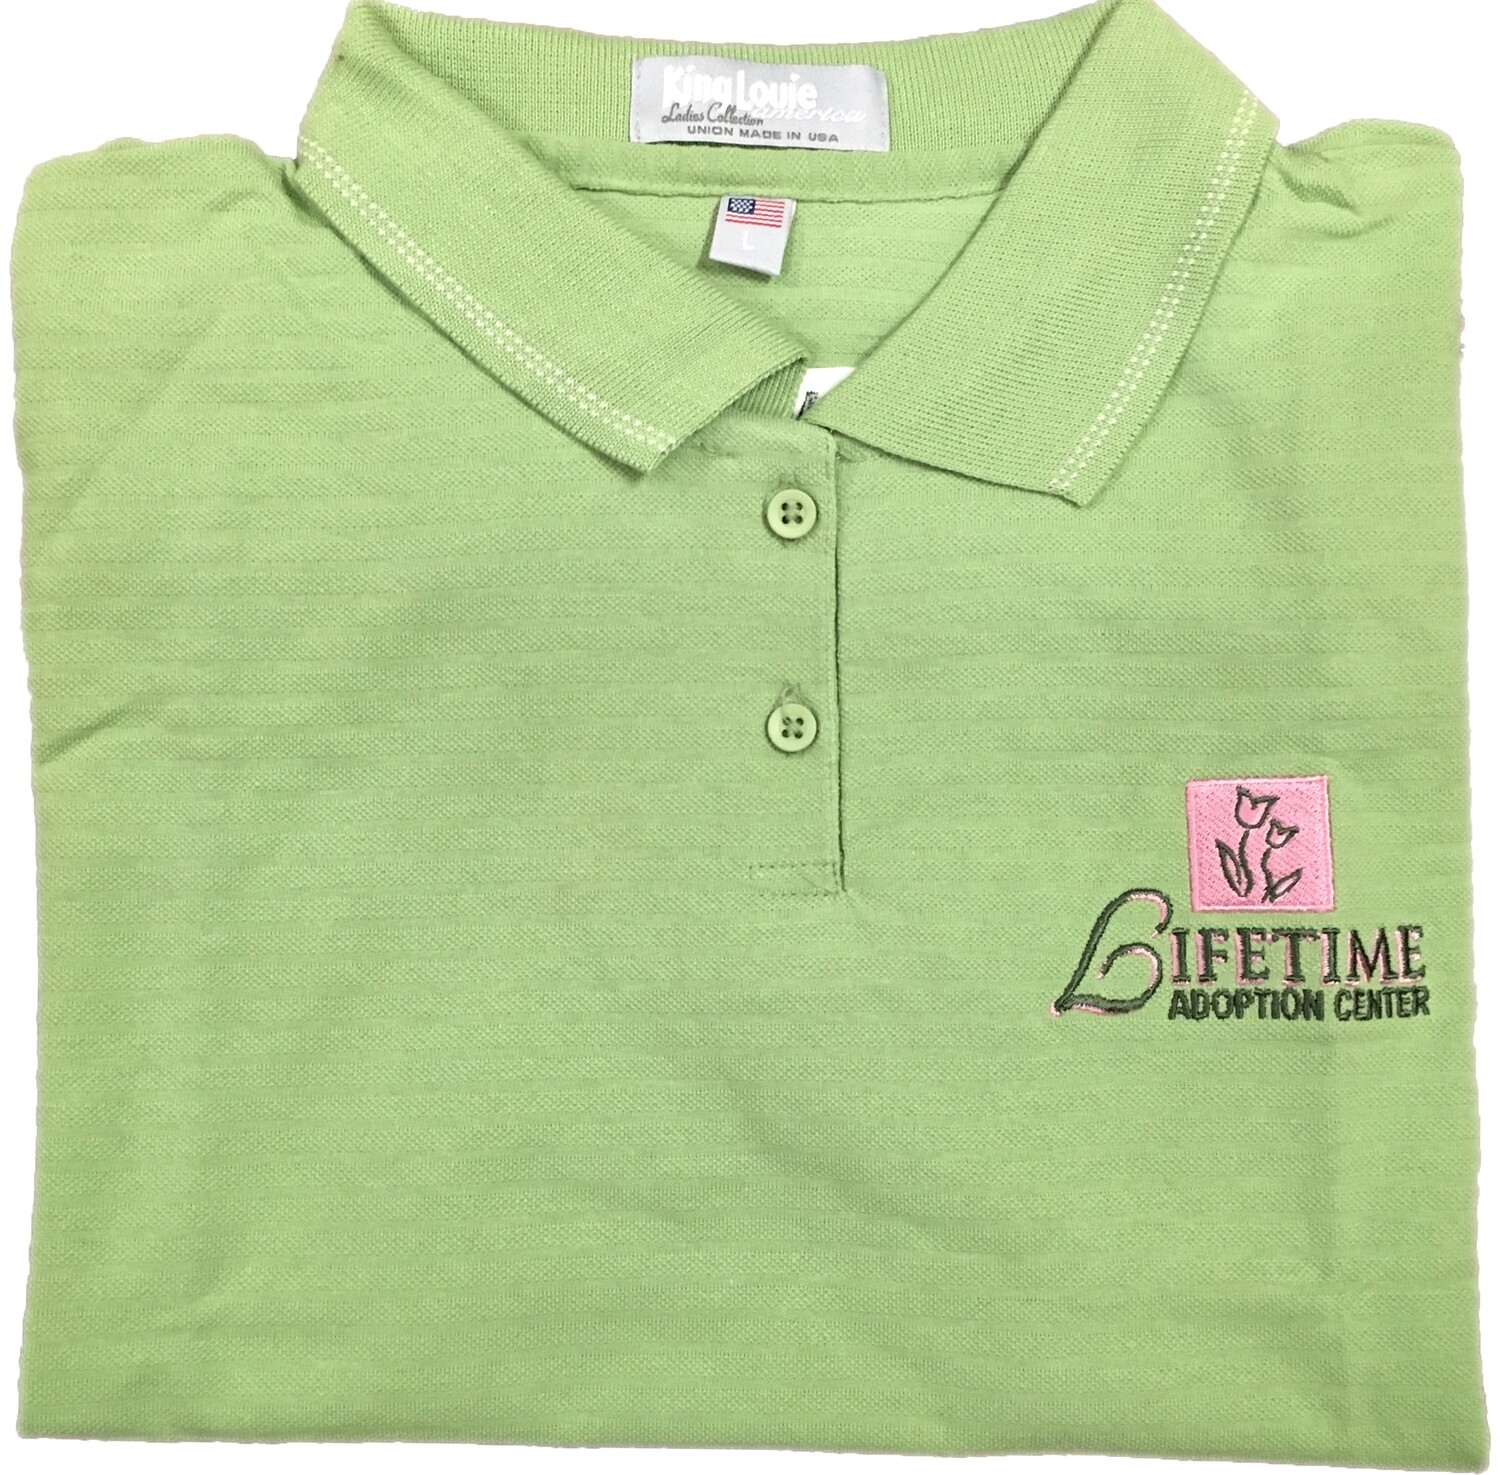 Green Lifetime Adoption Shirt